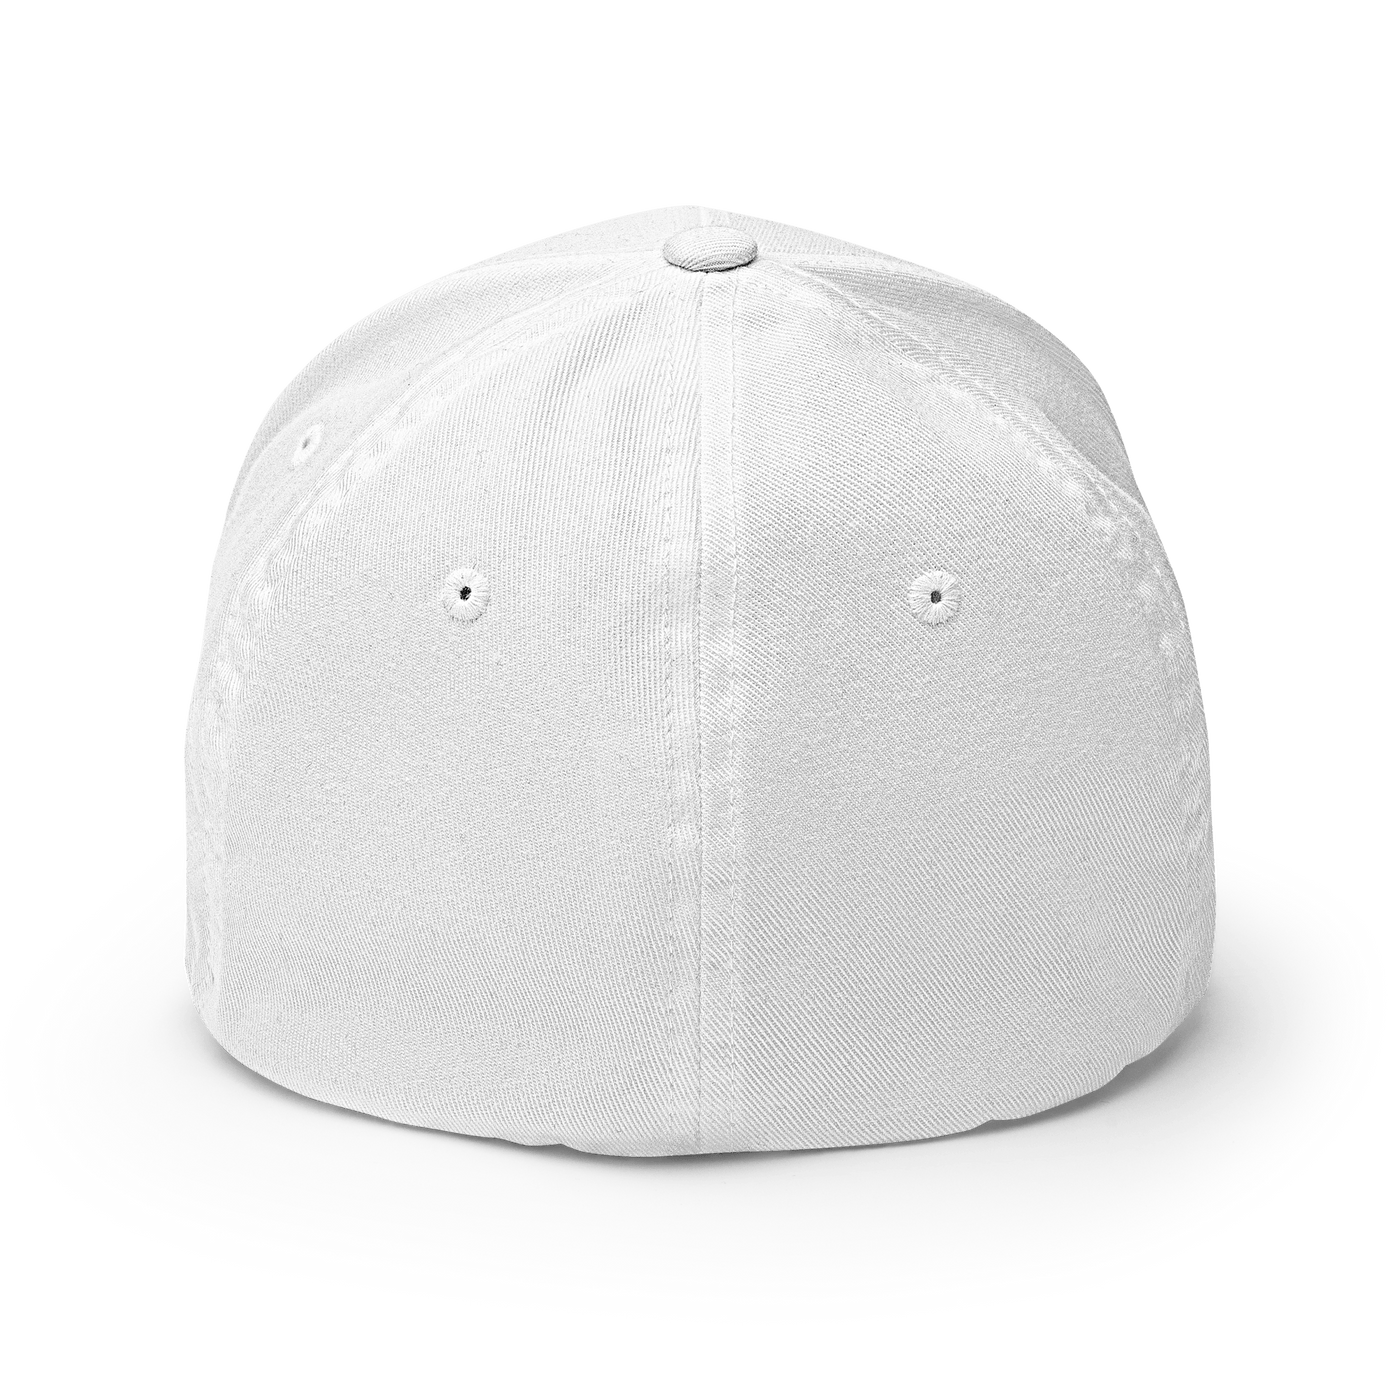 Hangman Flexfit Cap - Khaki - S/M - Just Another Cap Store